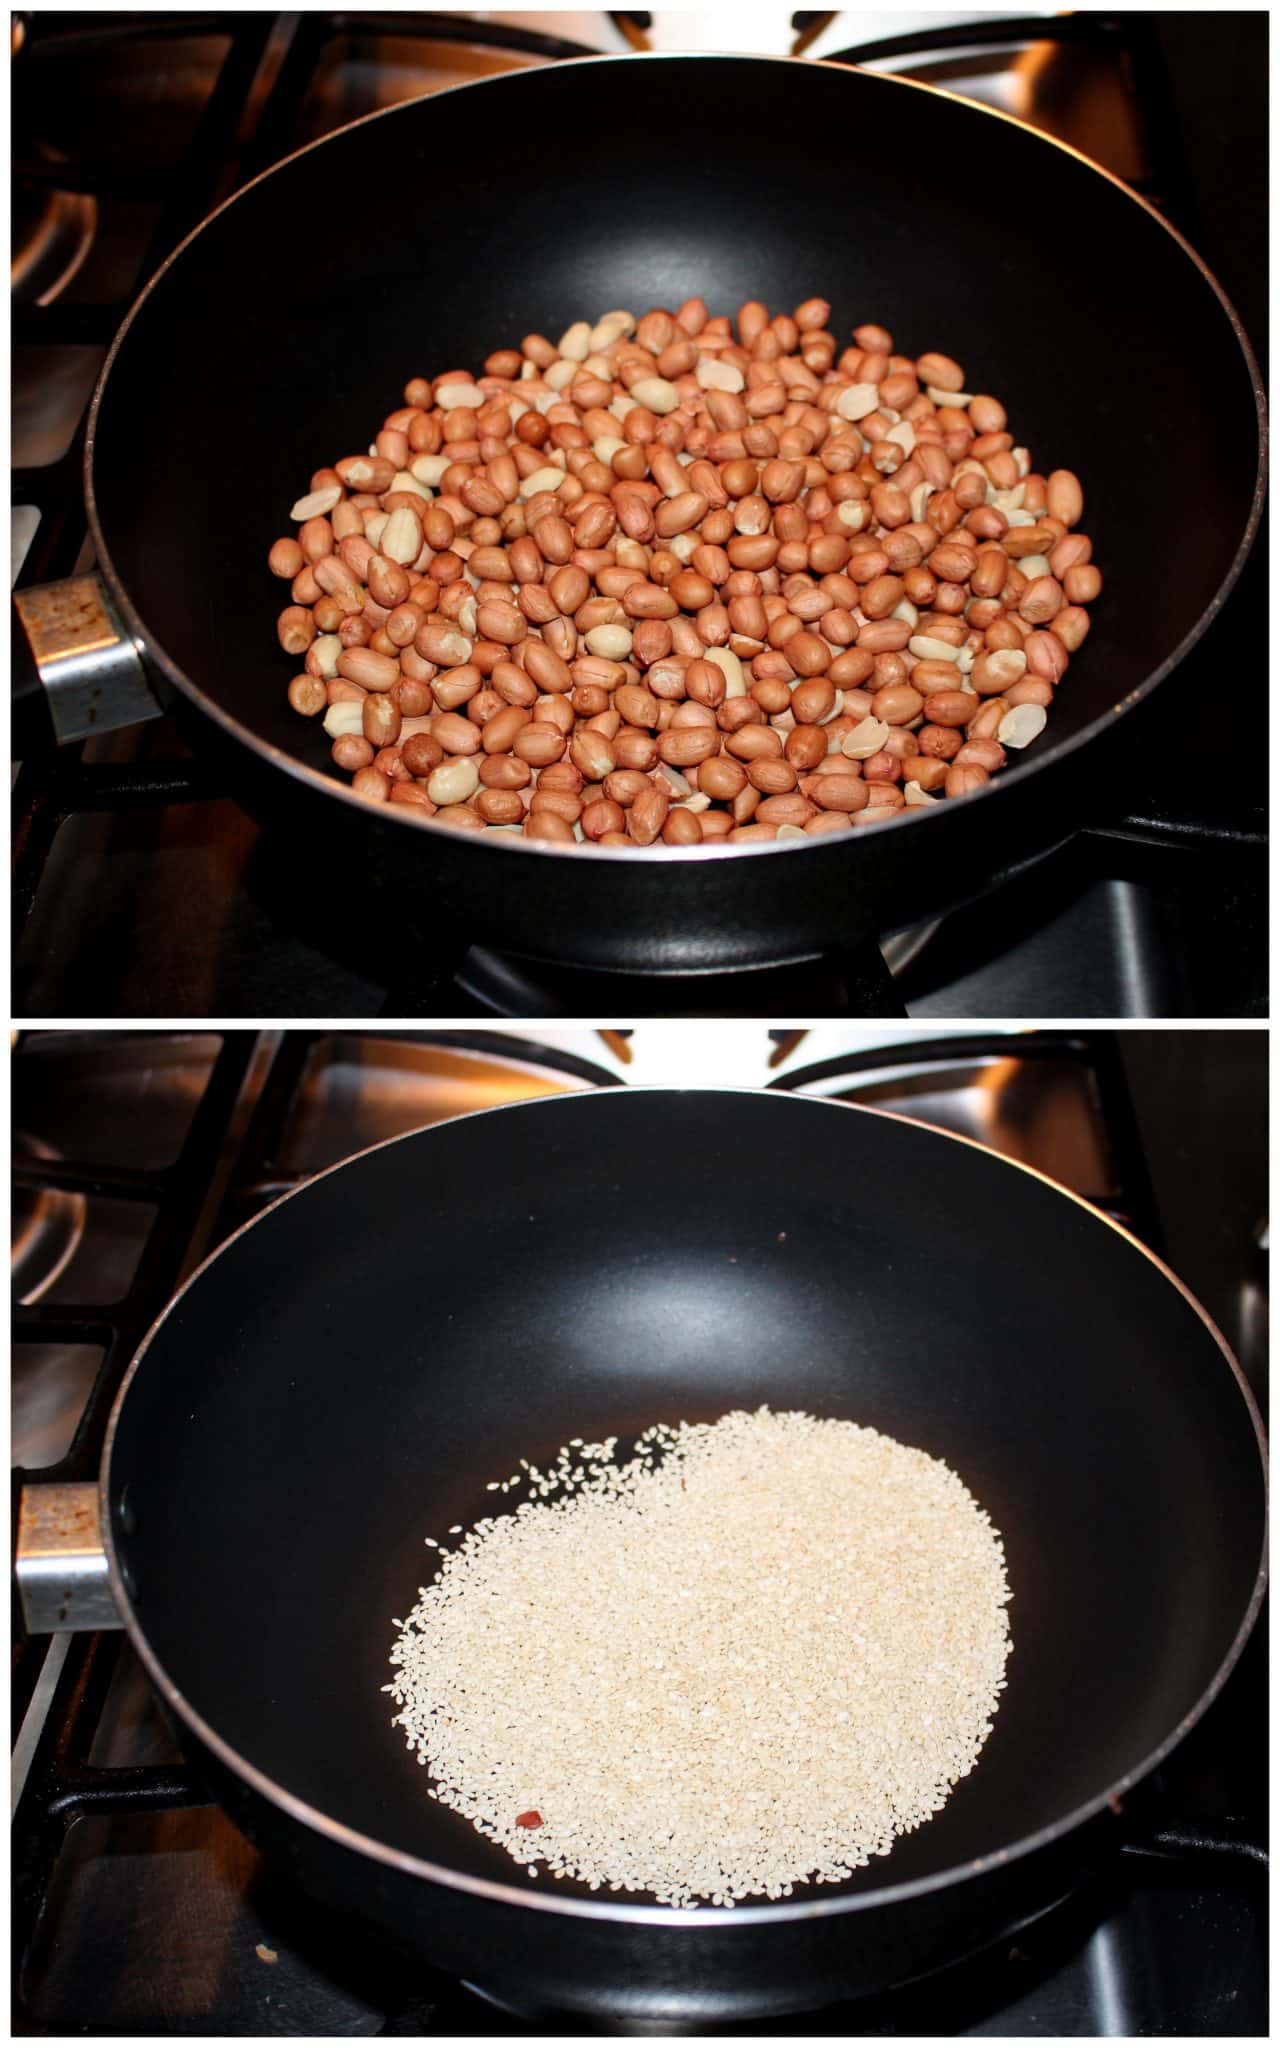 Roasting peanuts in a pan